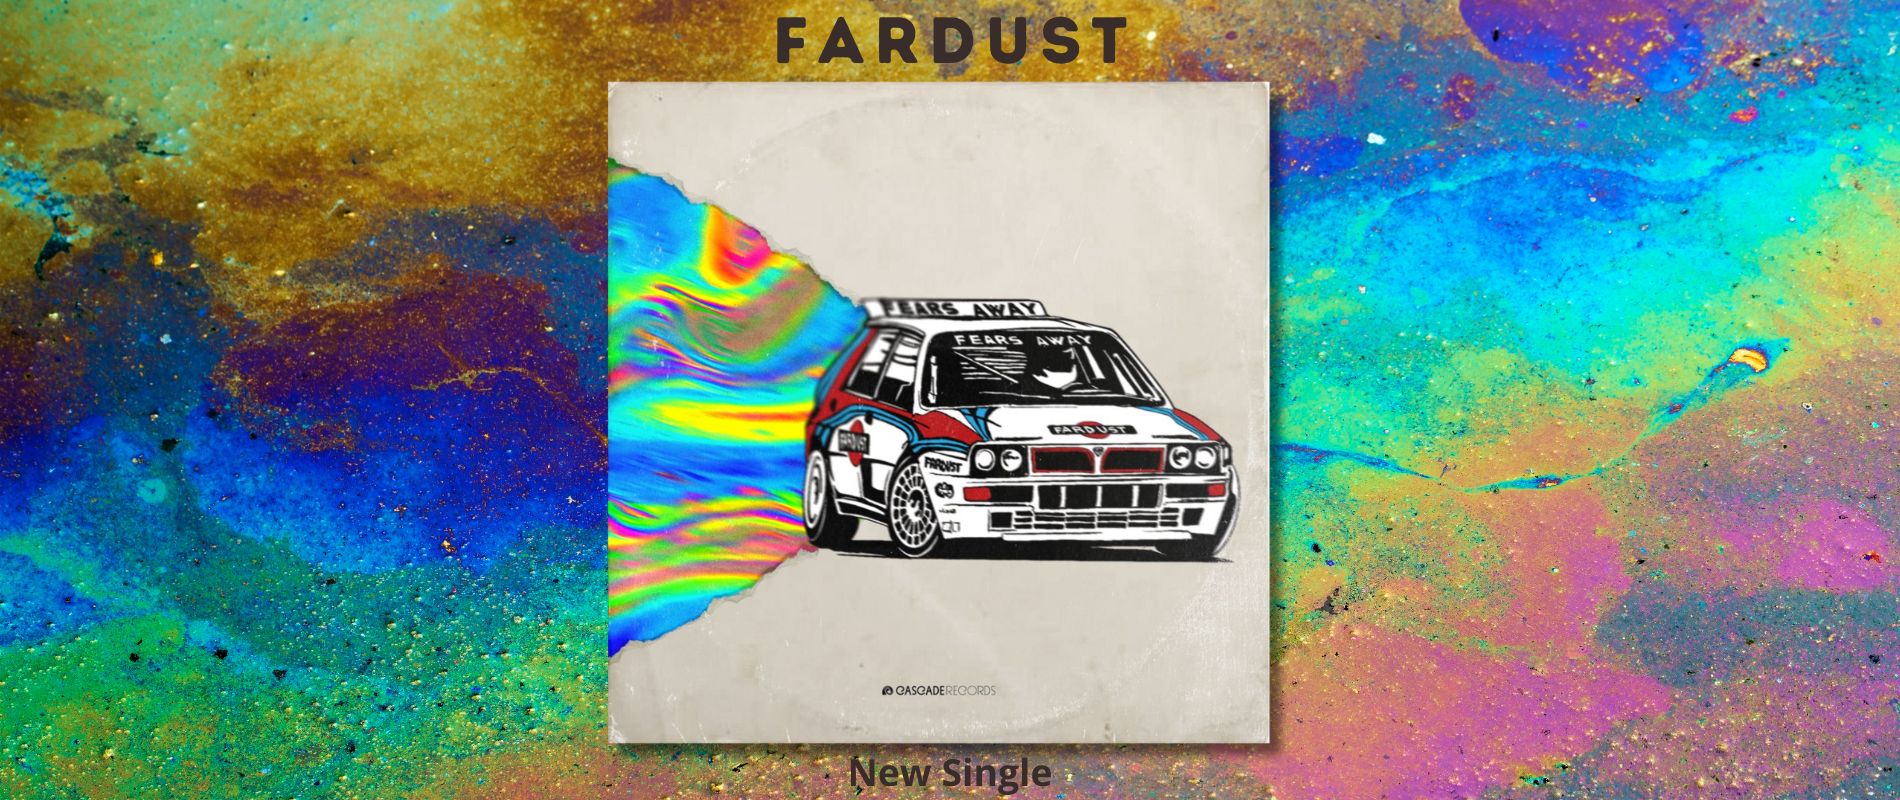 Fardust - Fears Away Cover chill lofi house music funk